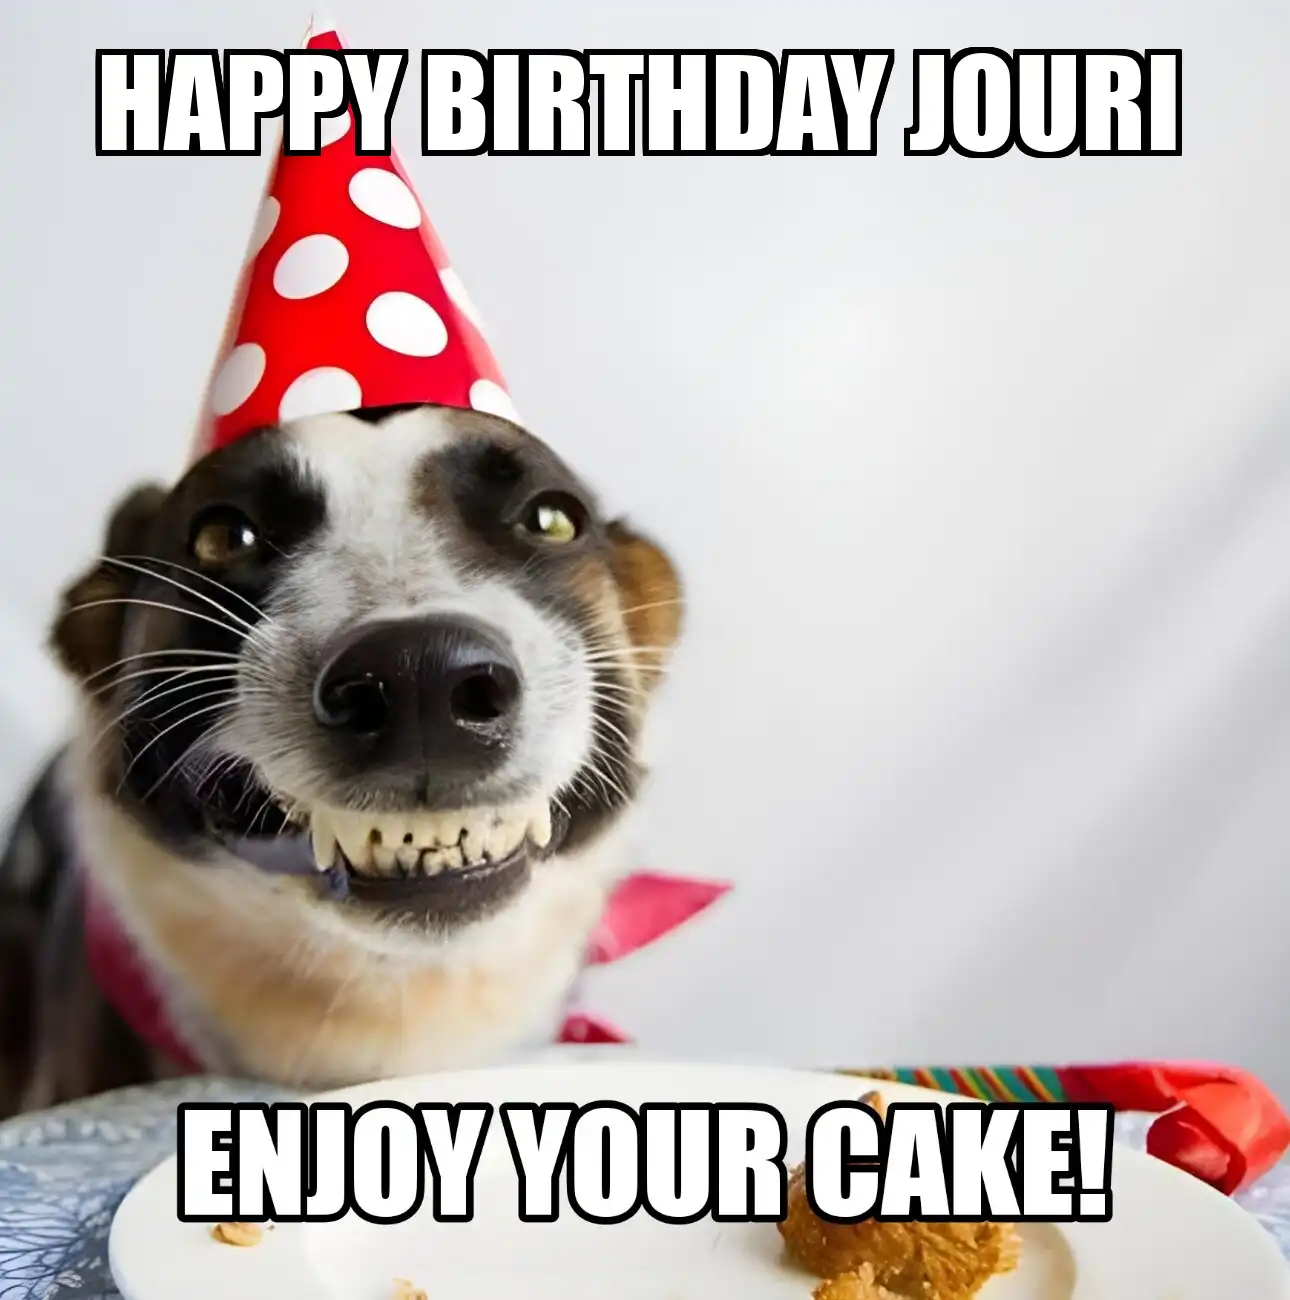 Happy Birthday Jouri Enjoy Your Cake Dog Meme